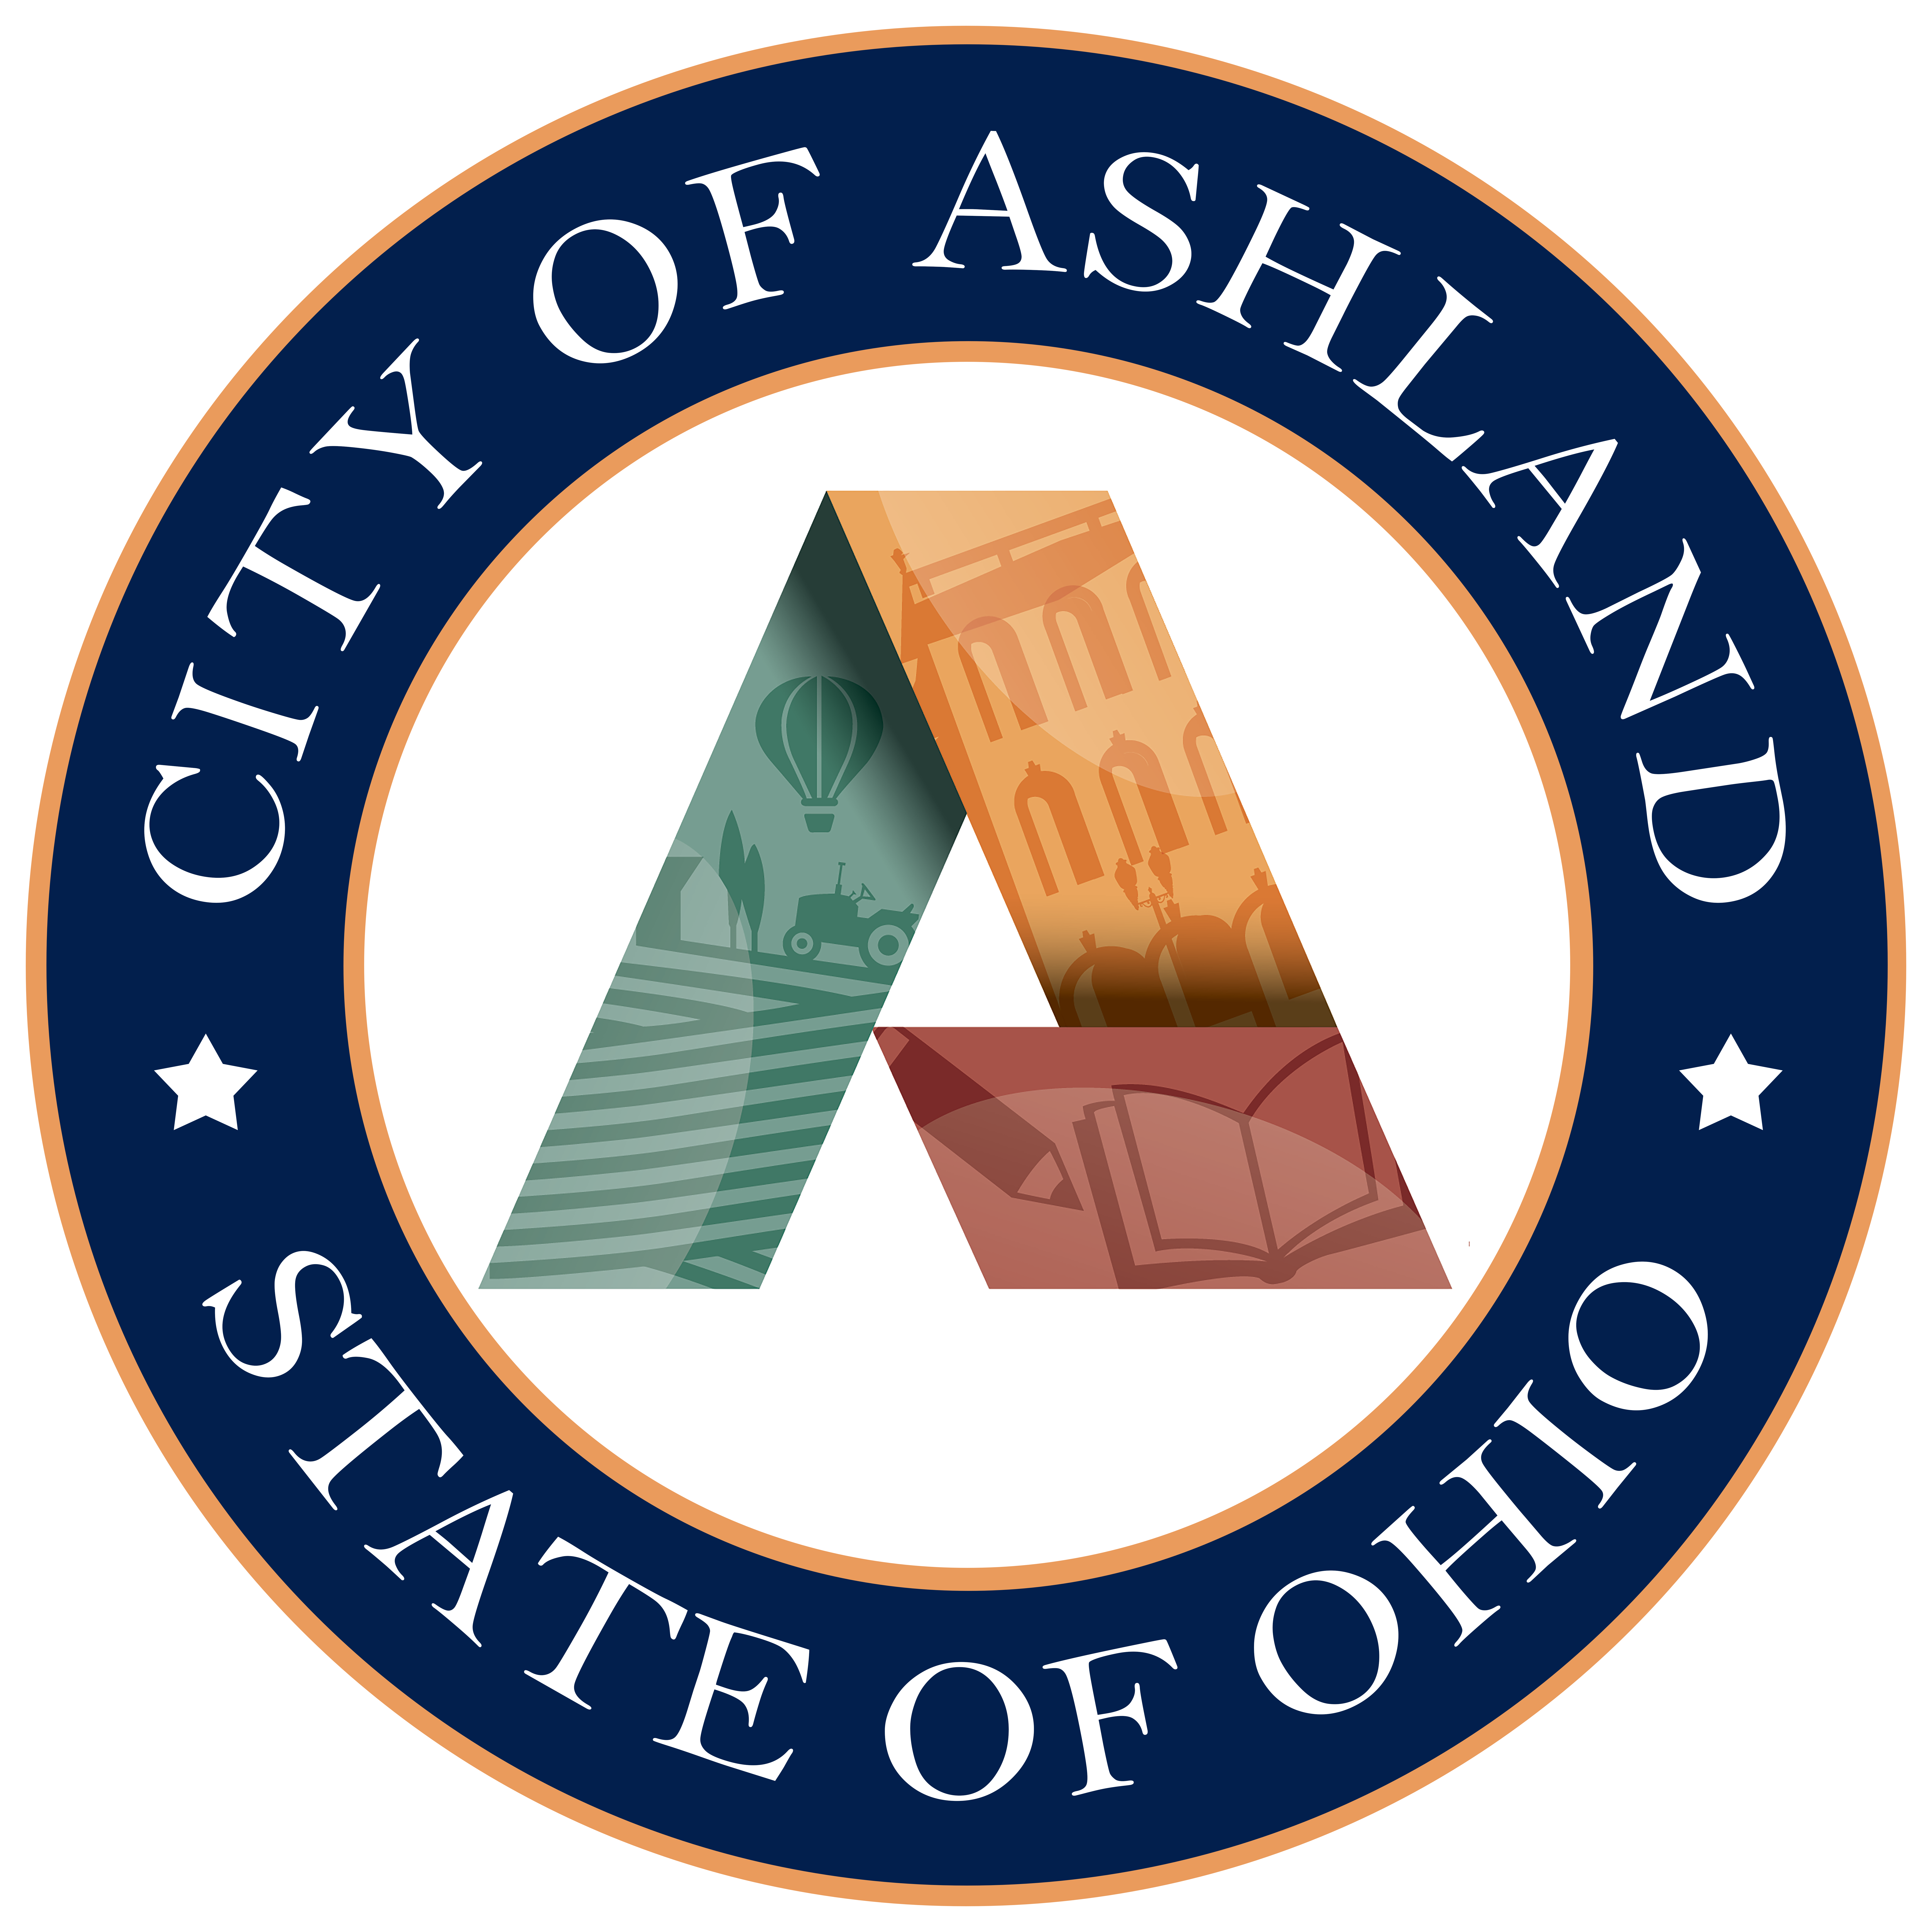 City of Ashland Ohio Seal